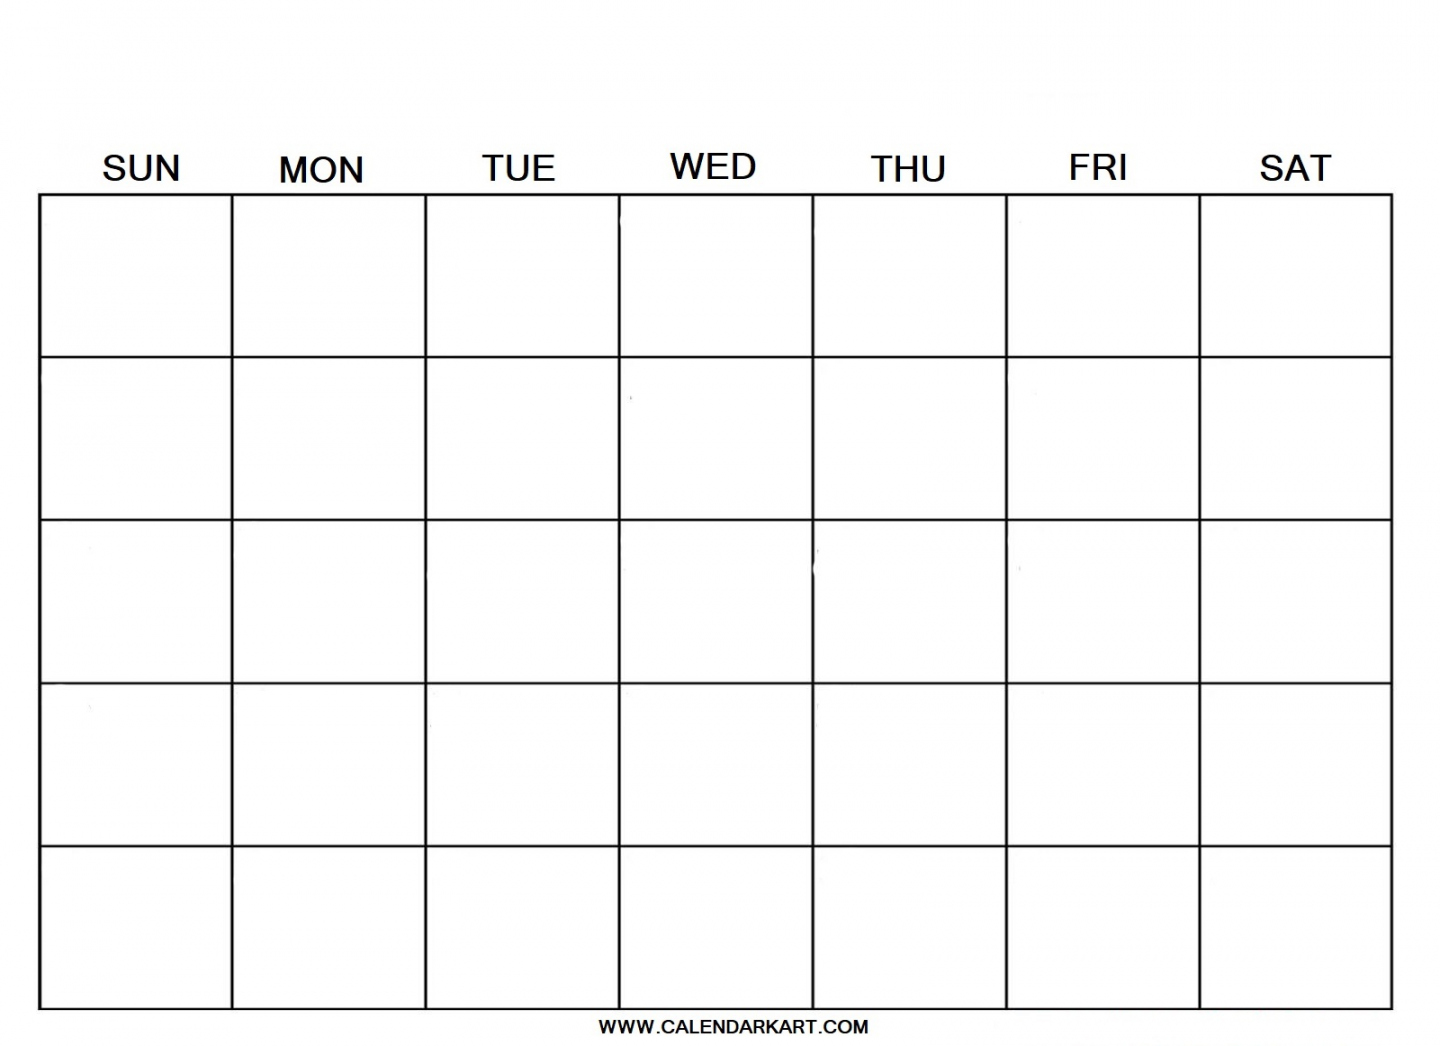 Blank Calendar Free Printable - Printable - Free Printable Blank Calendar Templates - CalendarKart